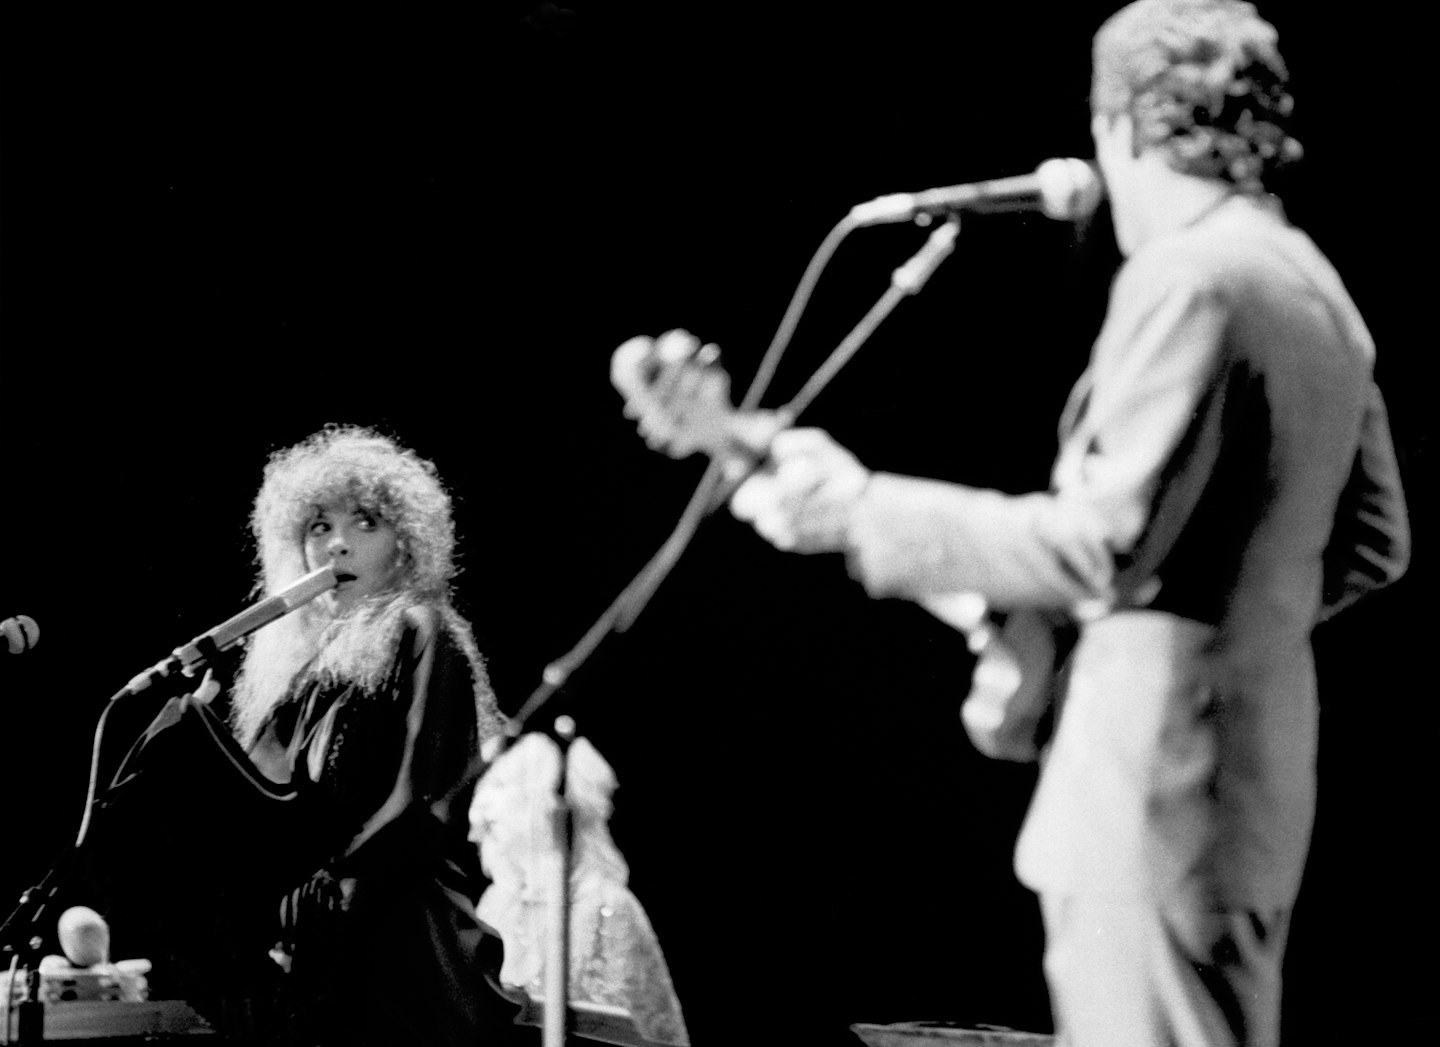 1975 – Stevie Nicks and Lindsey Buckingham